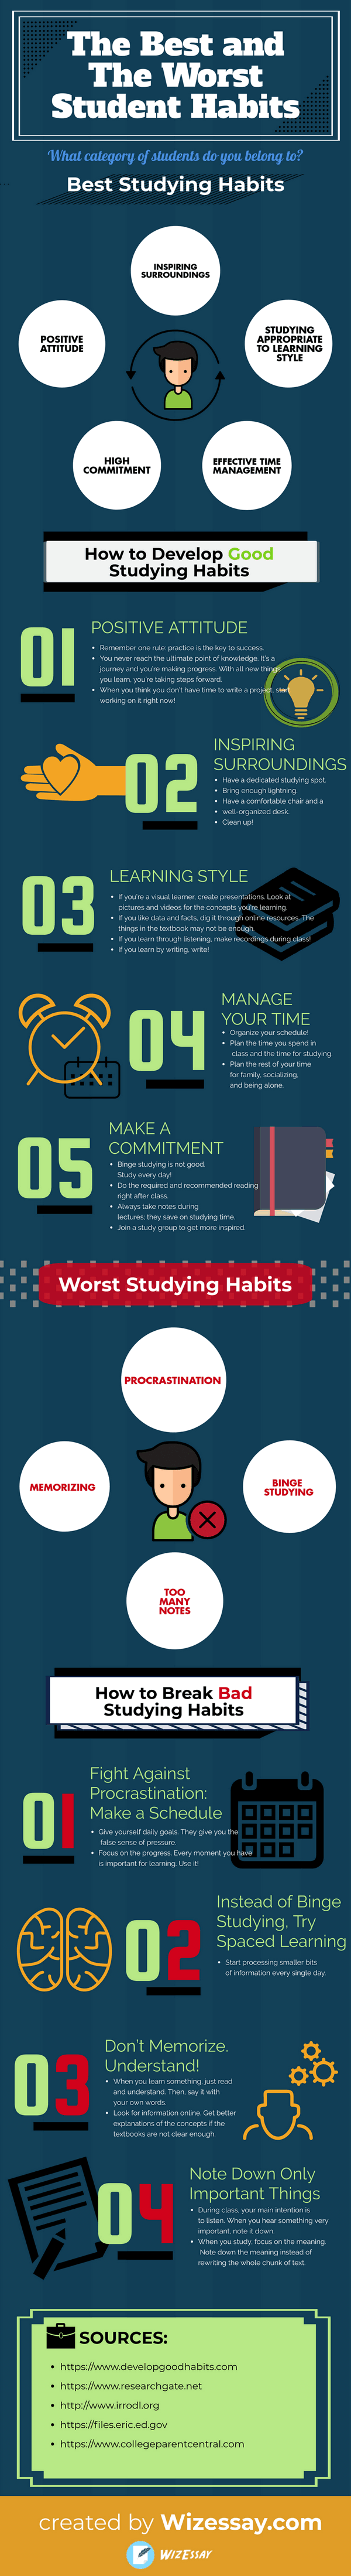 students habits